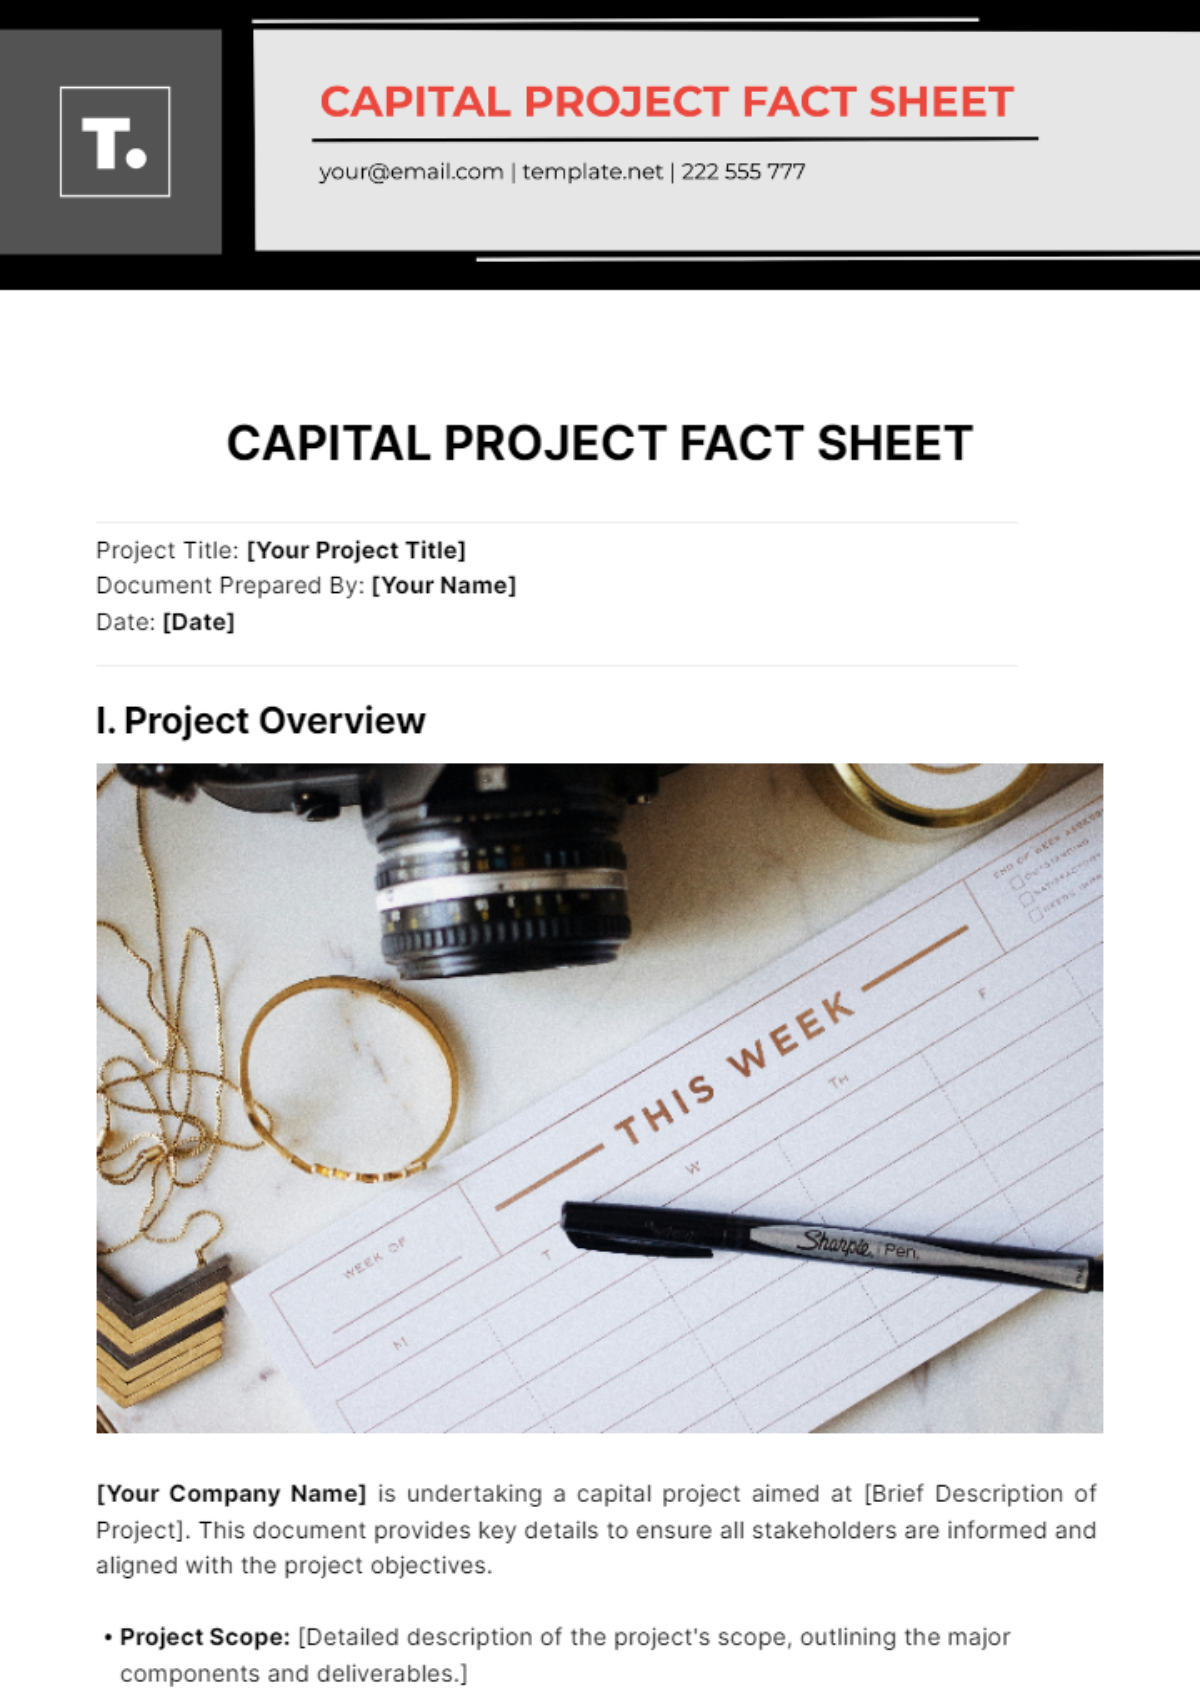 Capital Project Fact Sheet Template